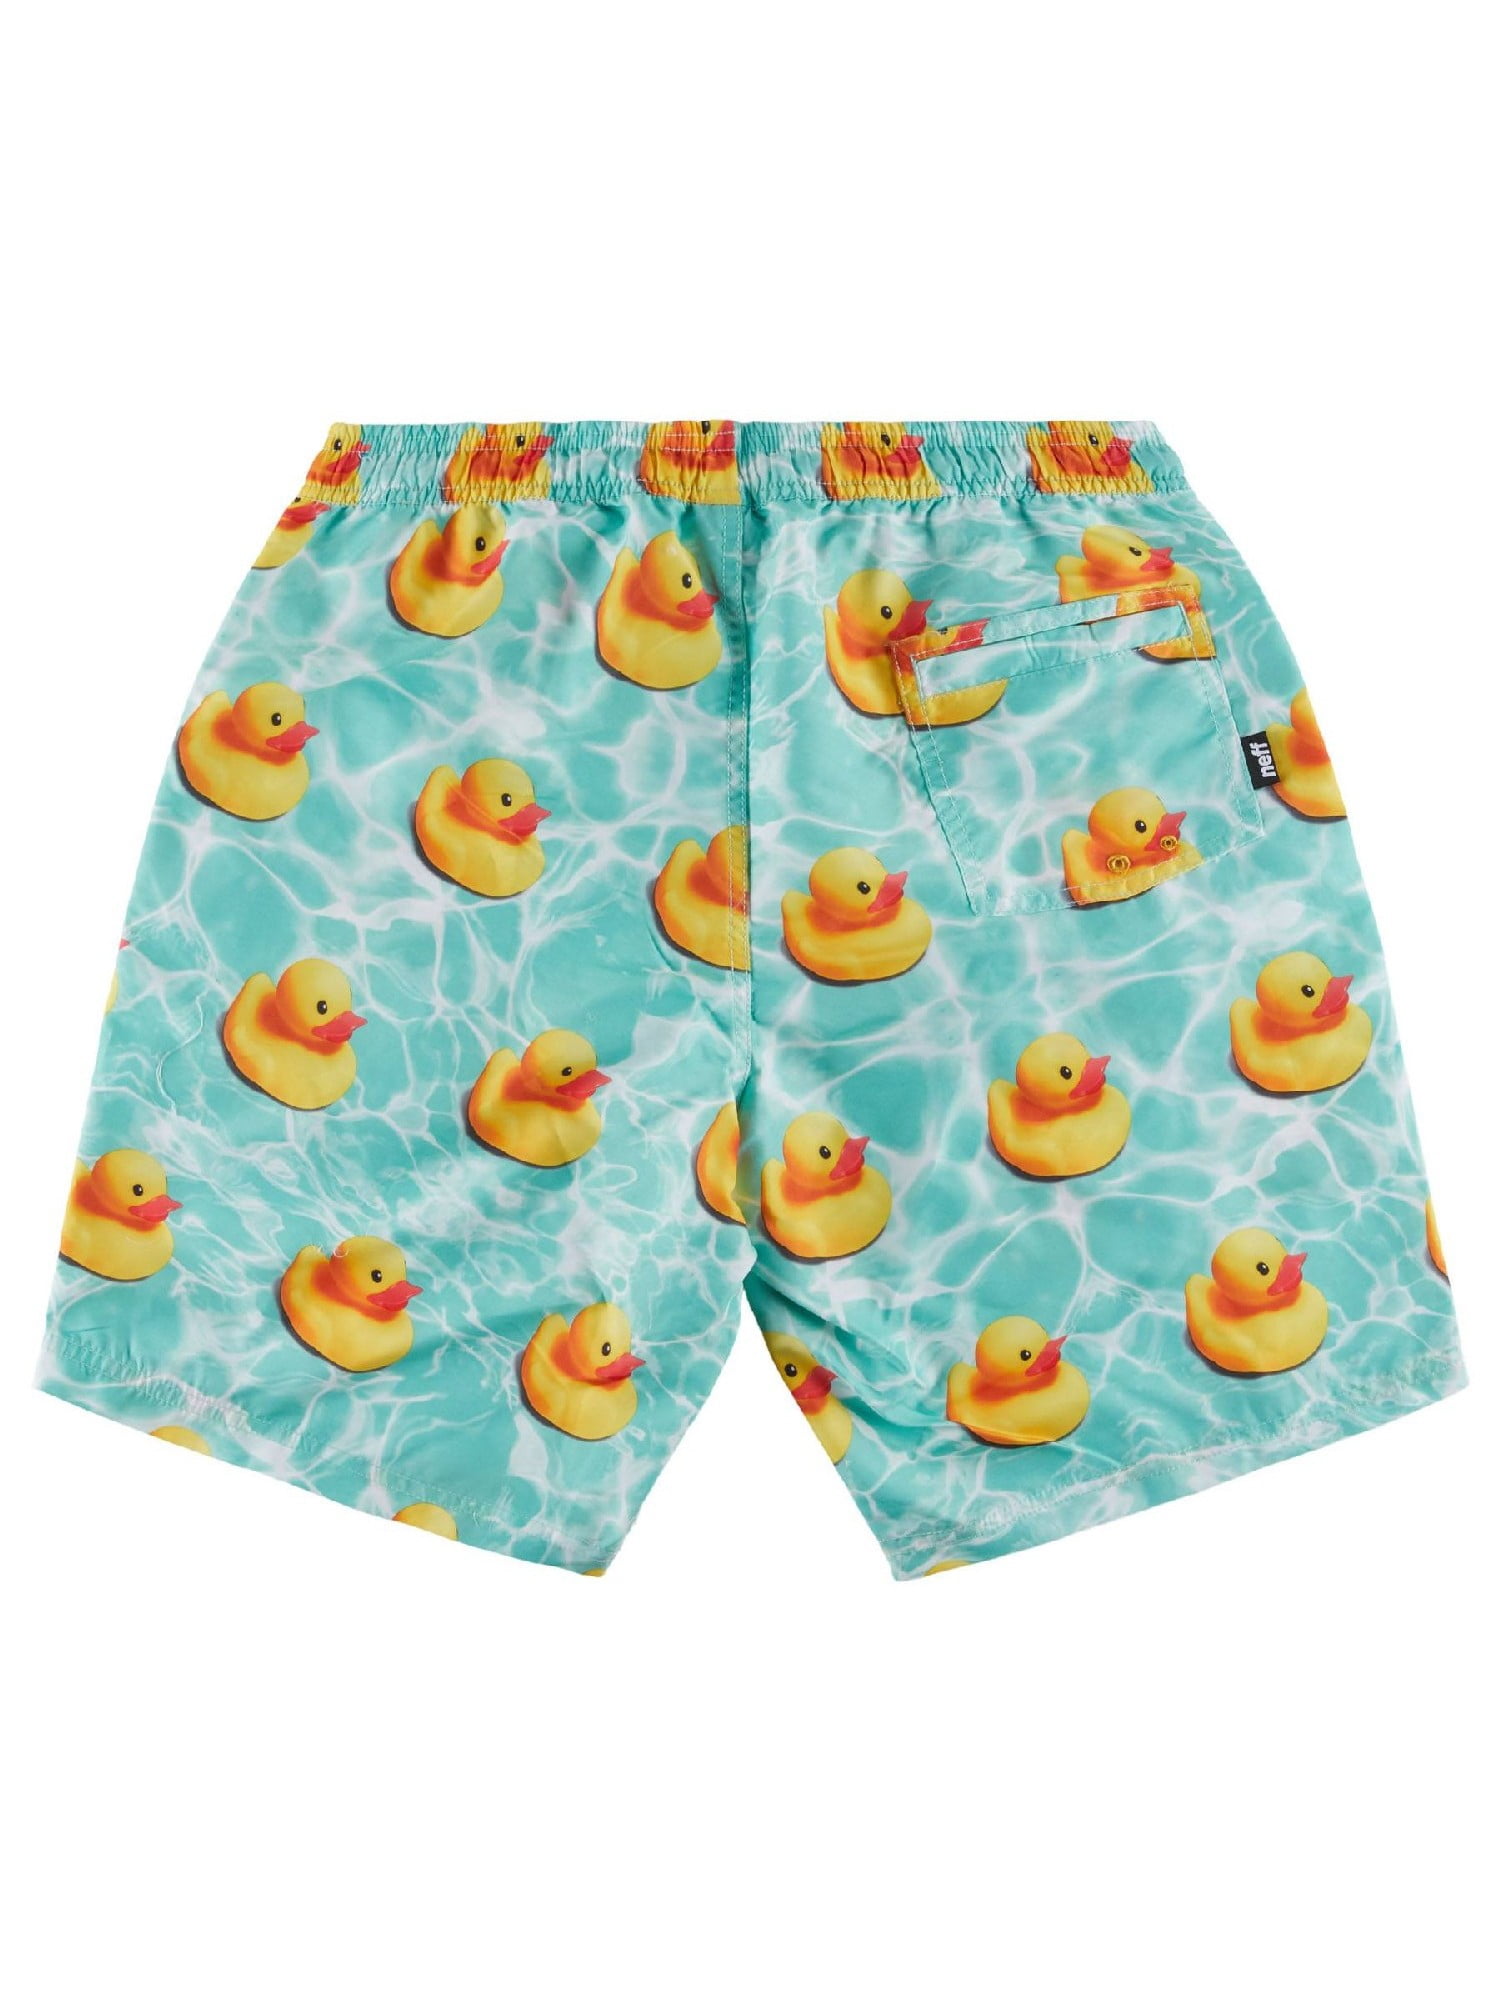 NEFF Rubber Duck Hot Tub Shorts 19” Bargain sale